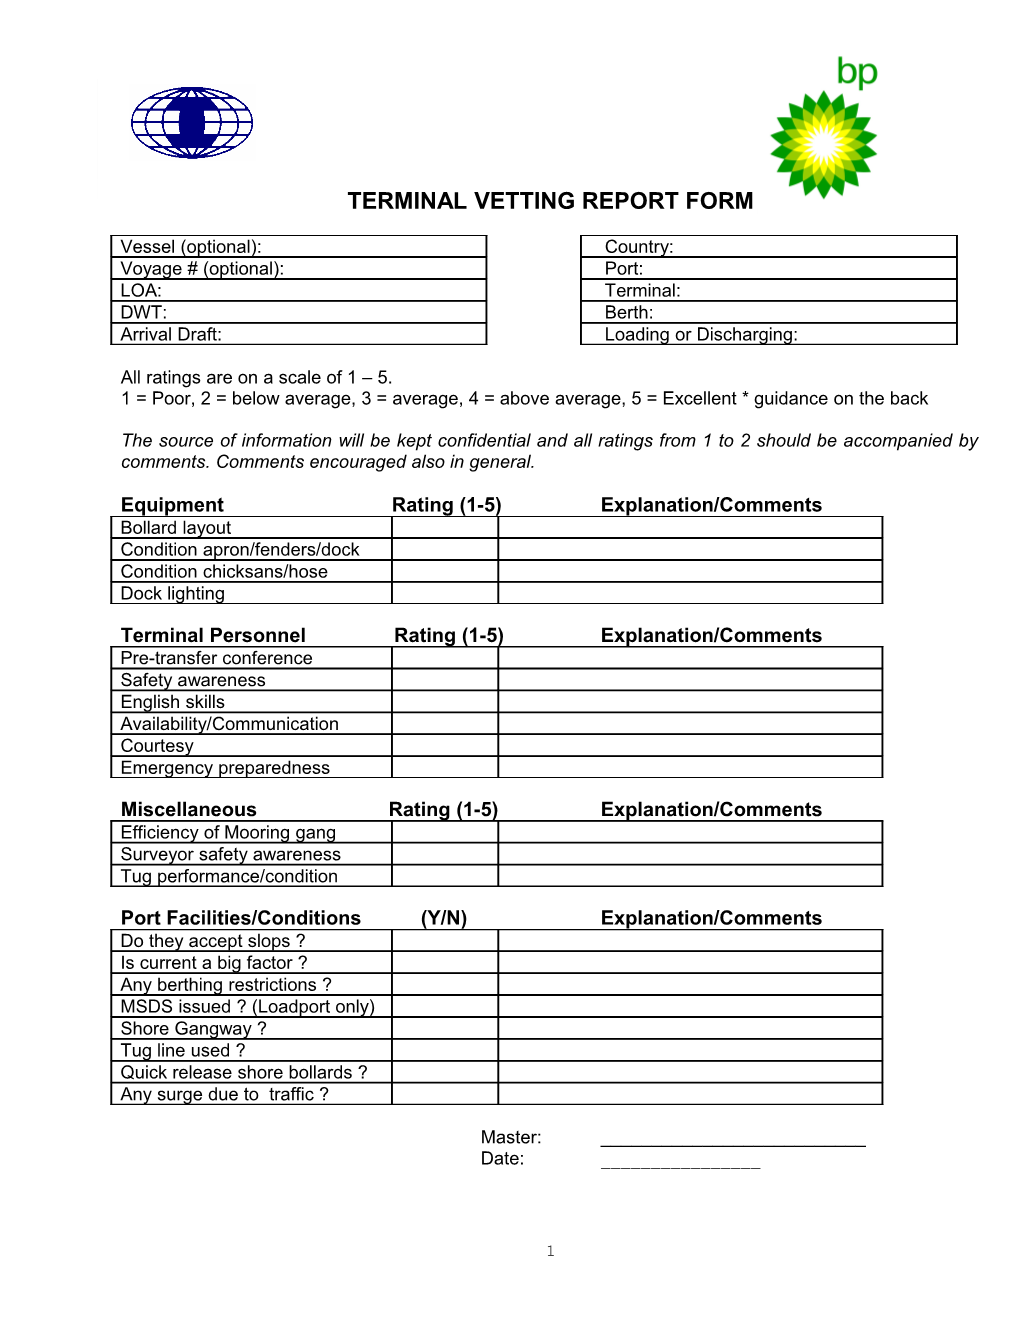 Terminal Vetting Report Form